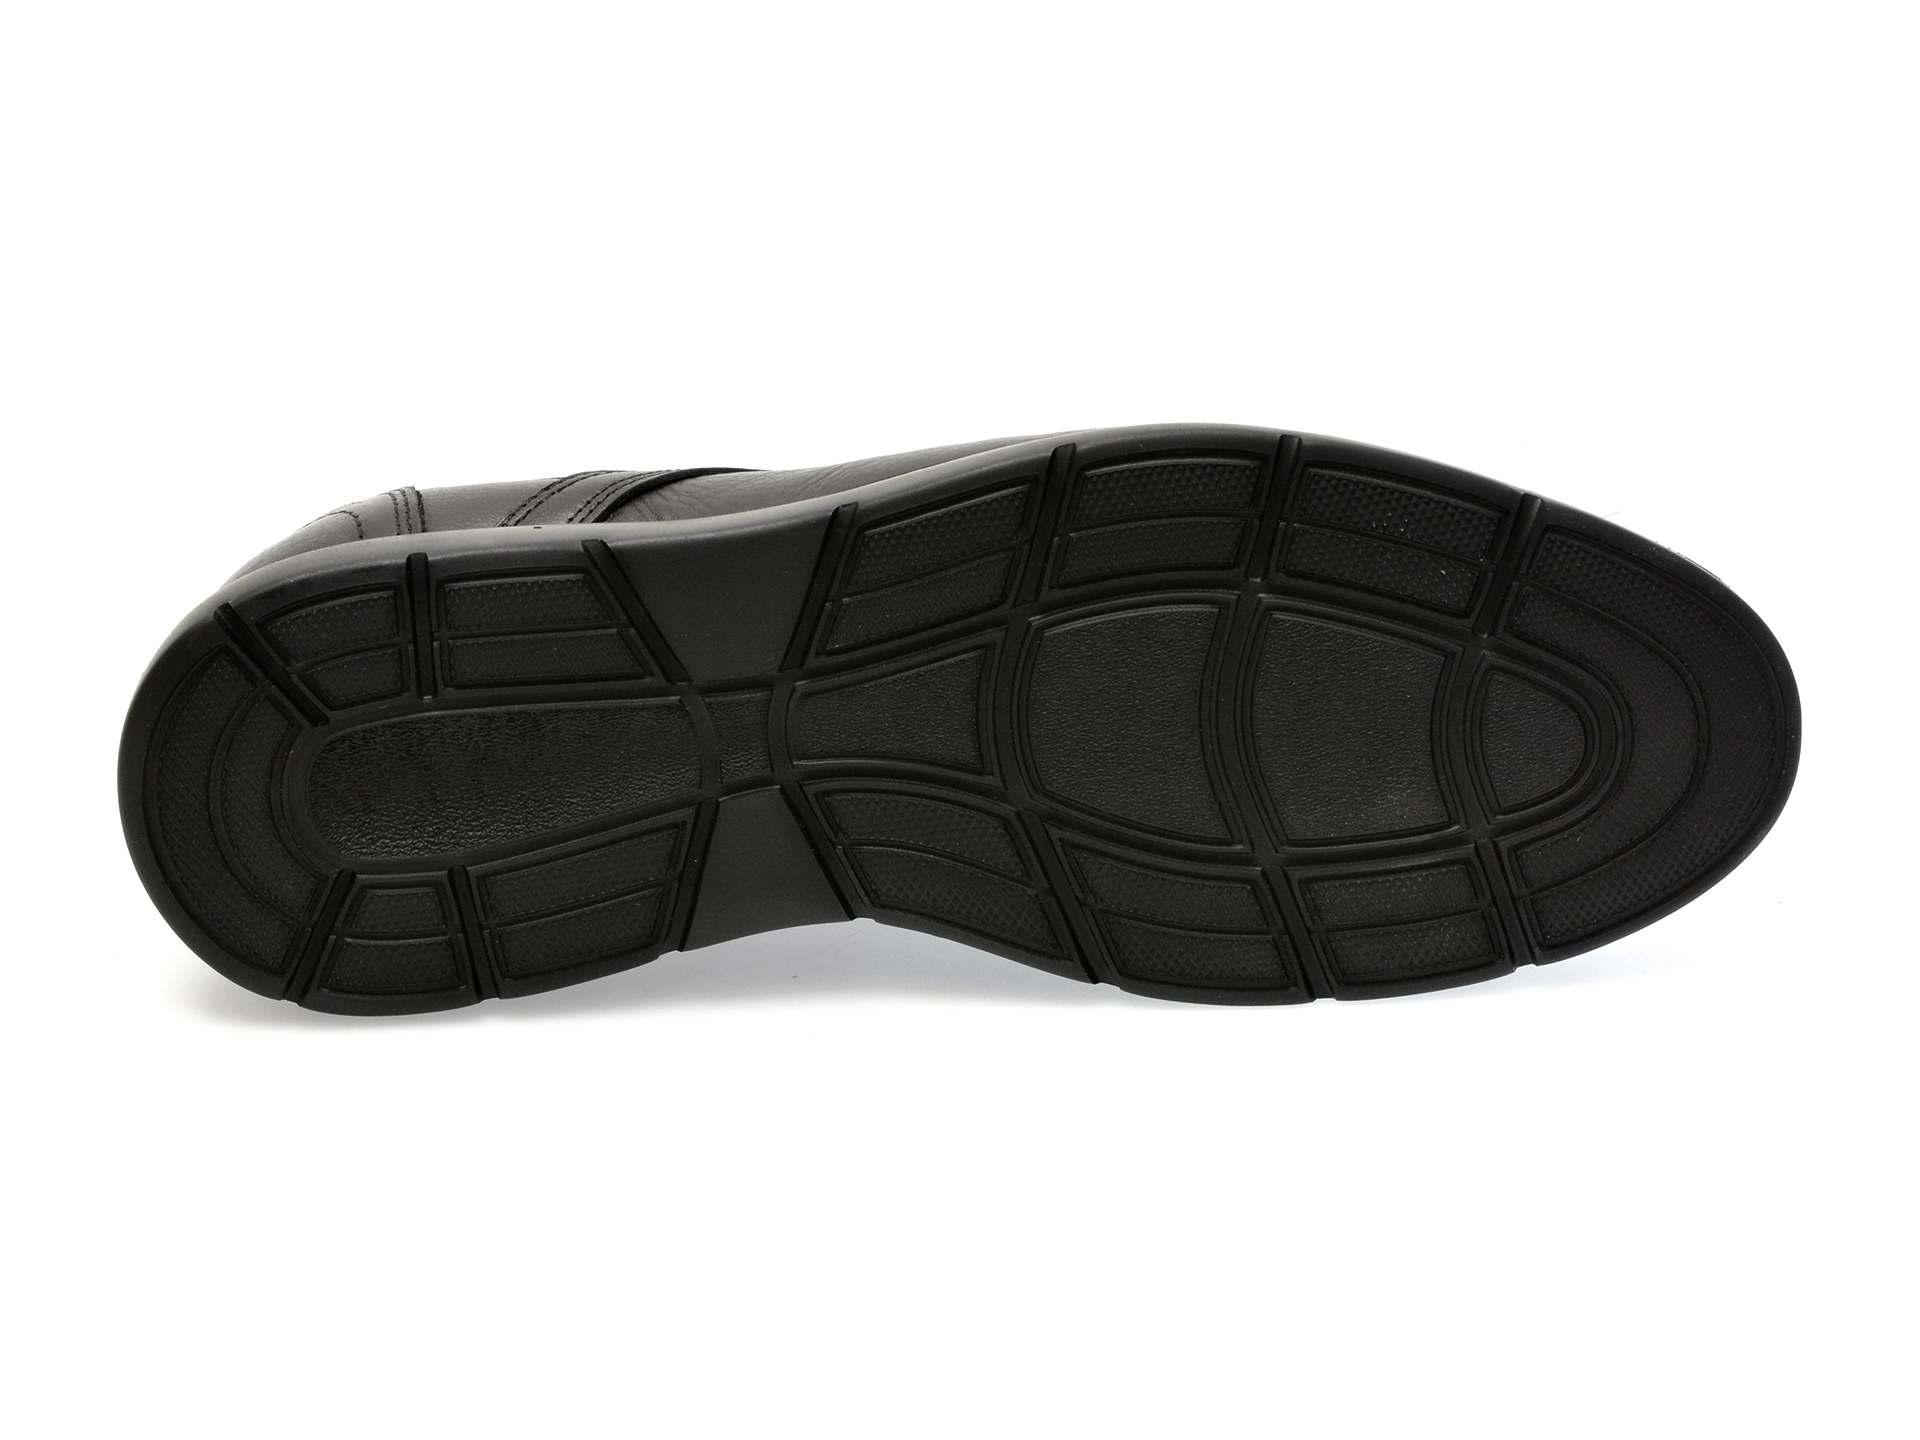 Pantofi OTTER negri, 3051, din piele naturala